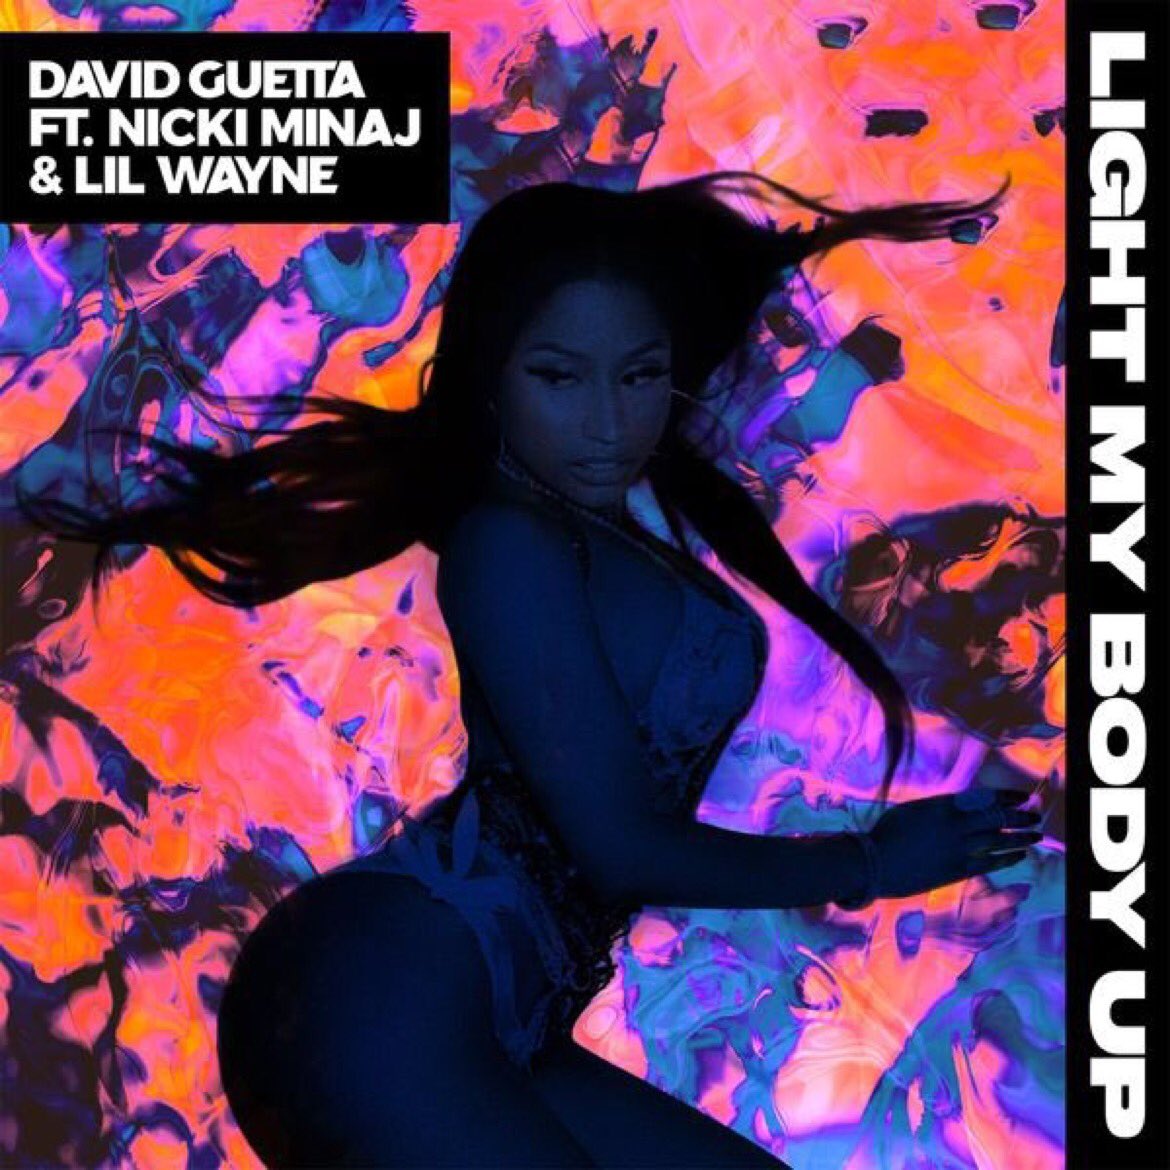 New Music: David Guetta – “Light My Body Up” Feat. Nicki Minaj & Lil Wayne [LISTEN]